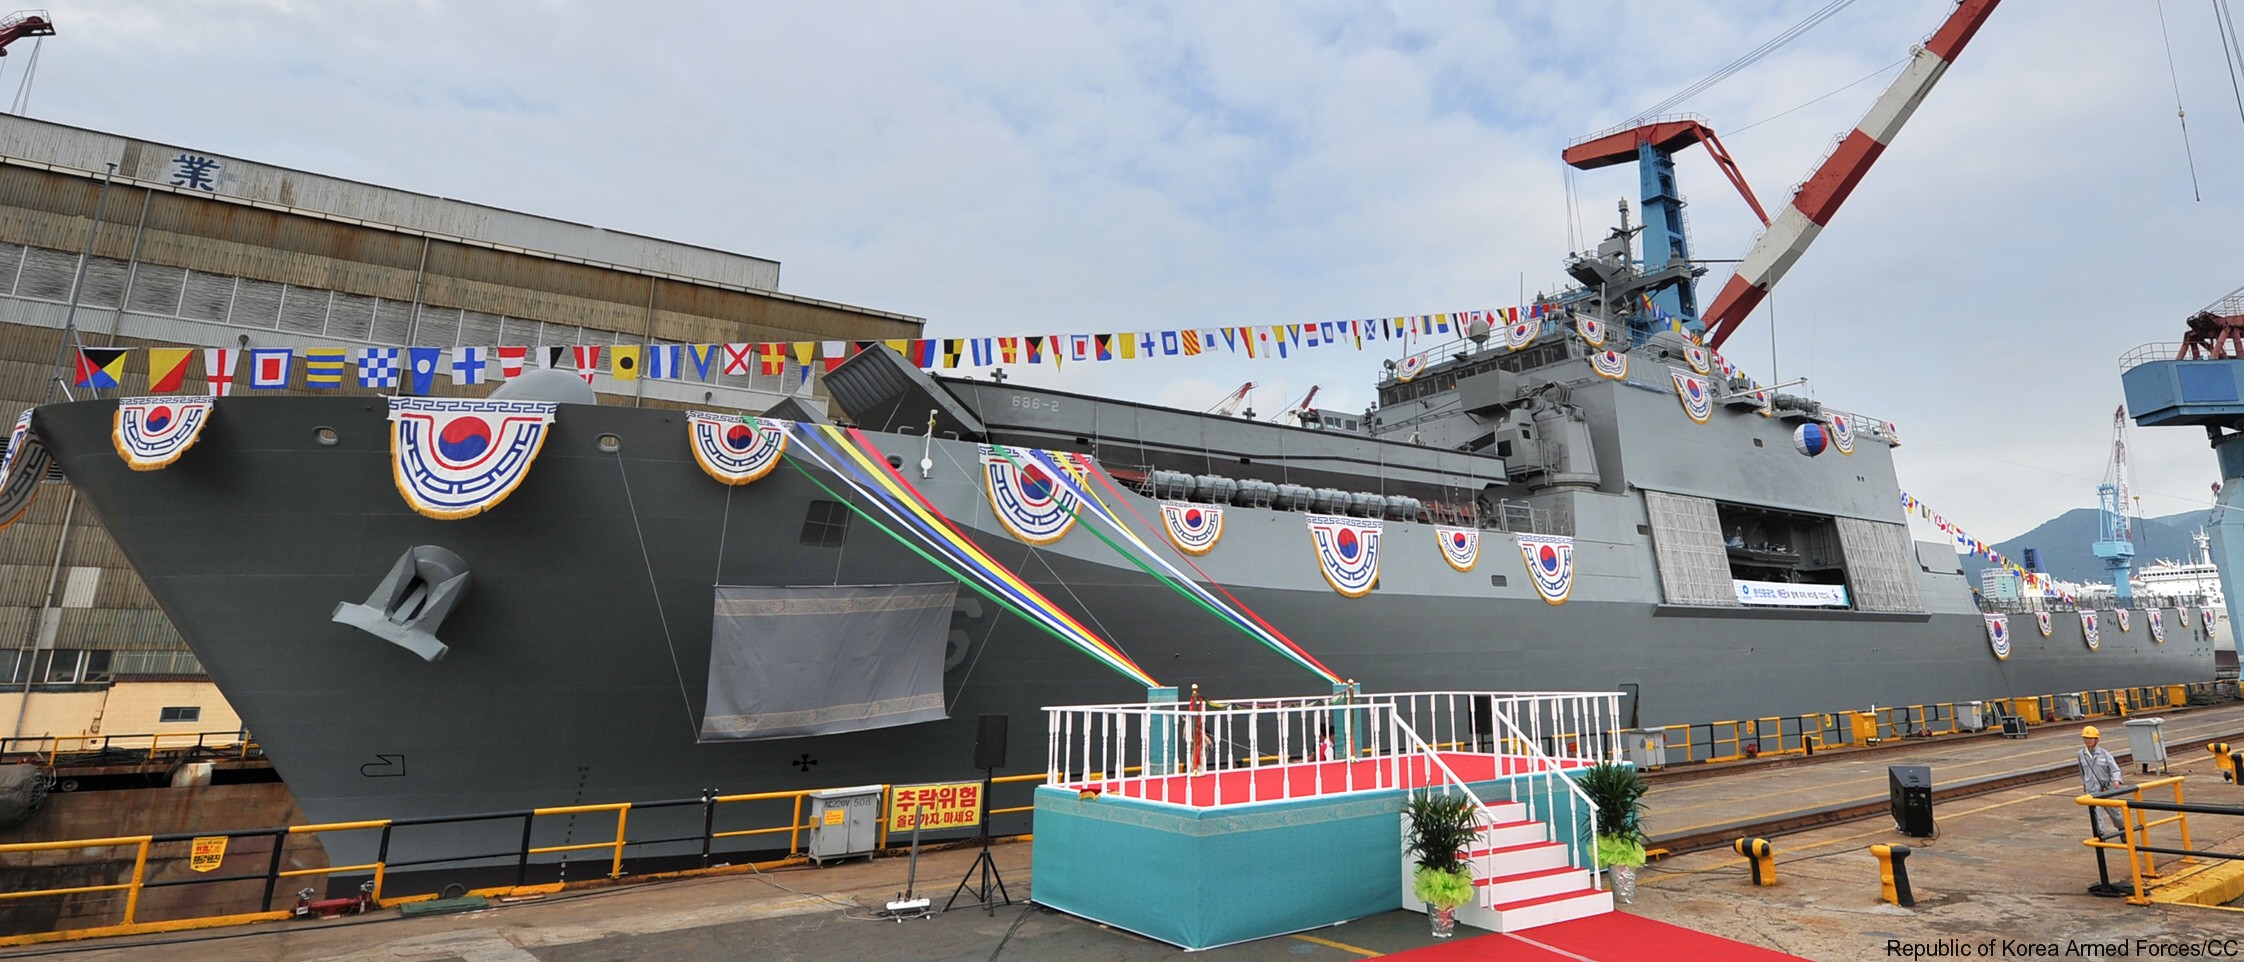 lst-686 roks cheon wang bong class tank landing ship amphibious korean navy rokn helicopter lcm 09